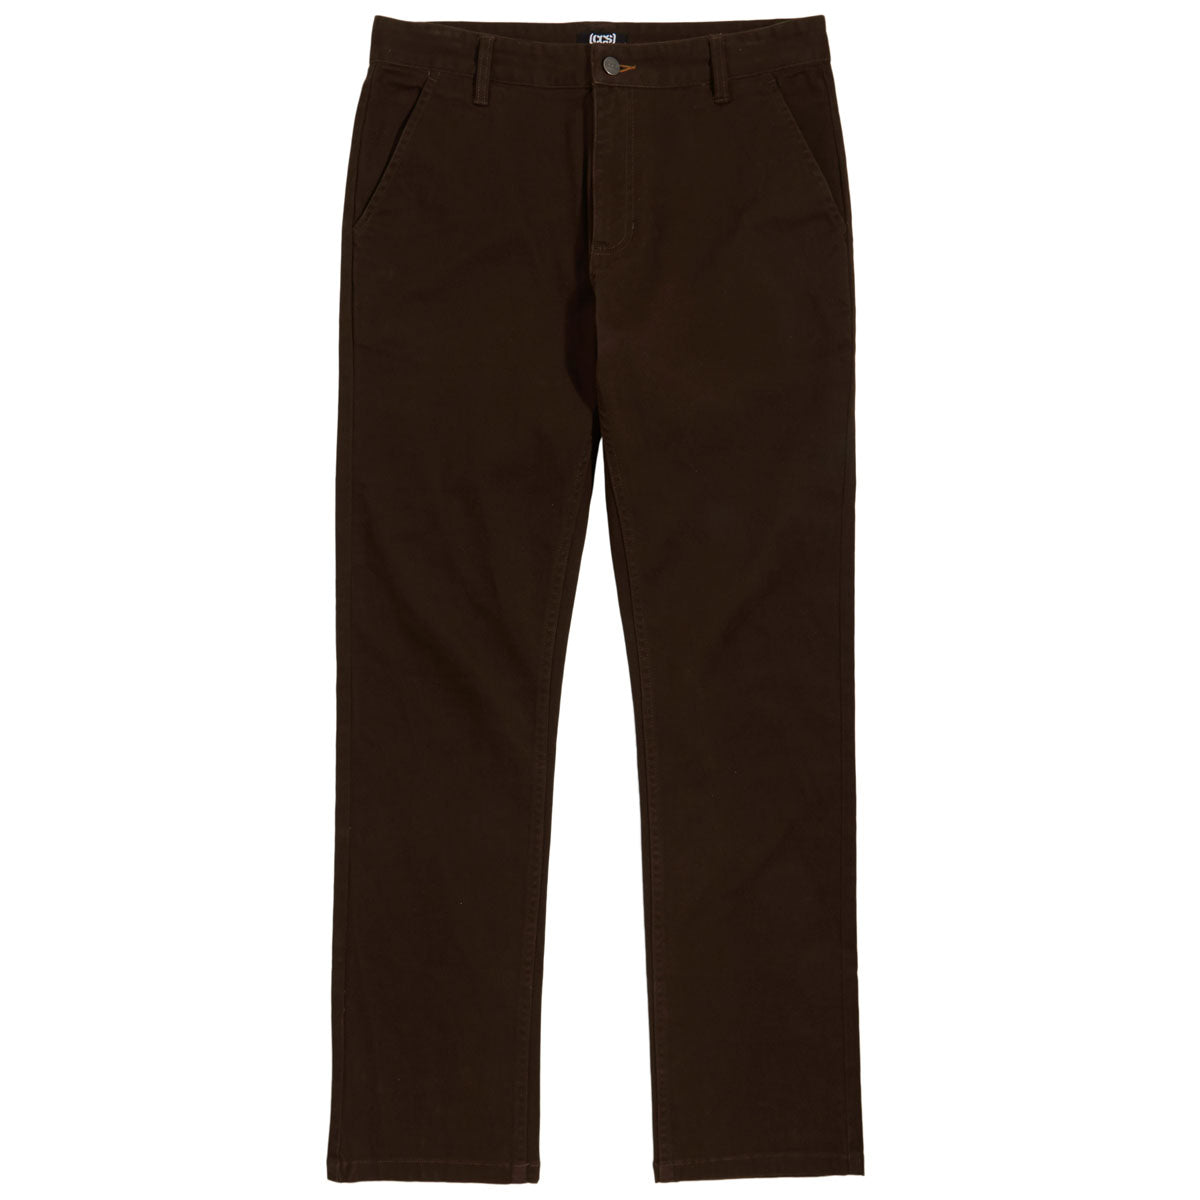 CCS Standard Plus Straight Chino Pants - Brown image 5